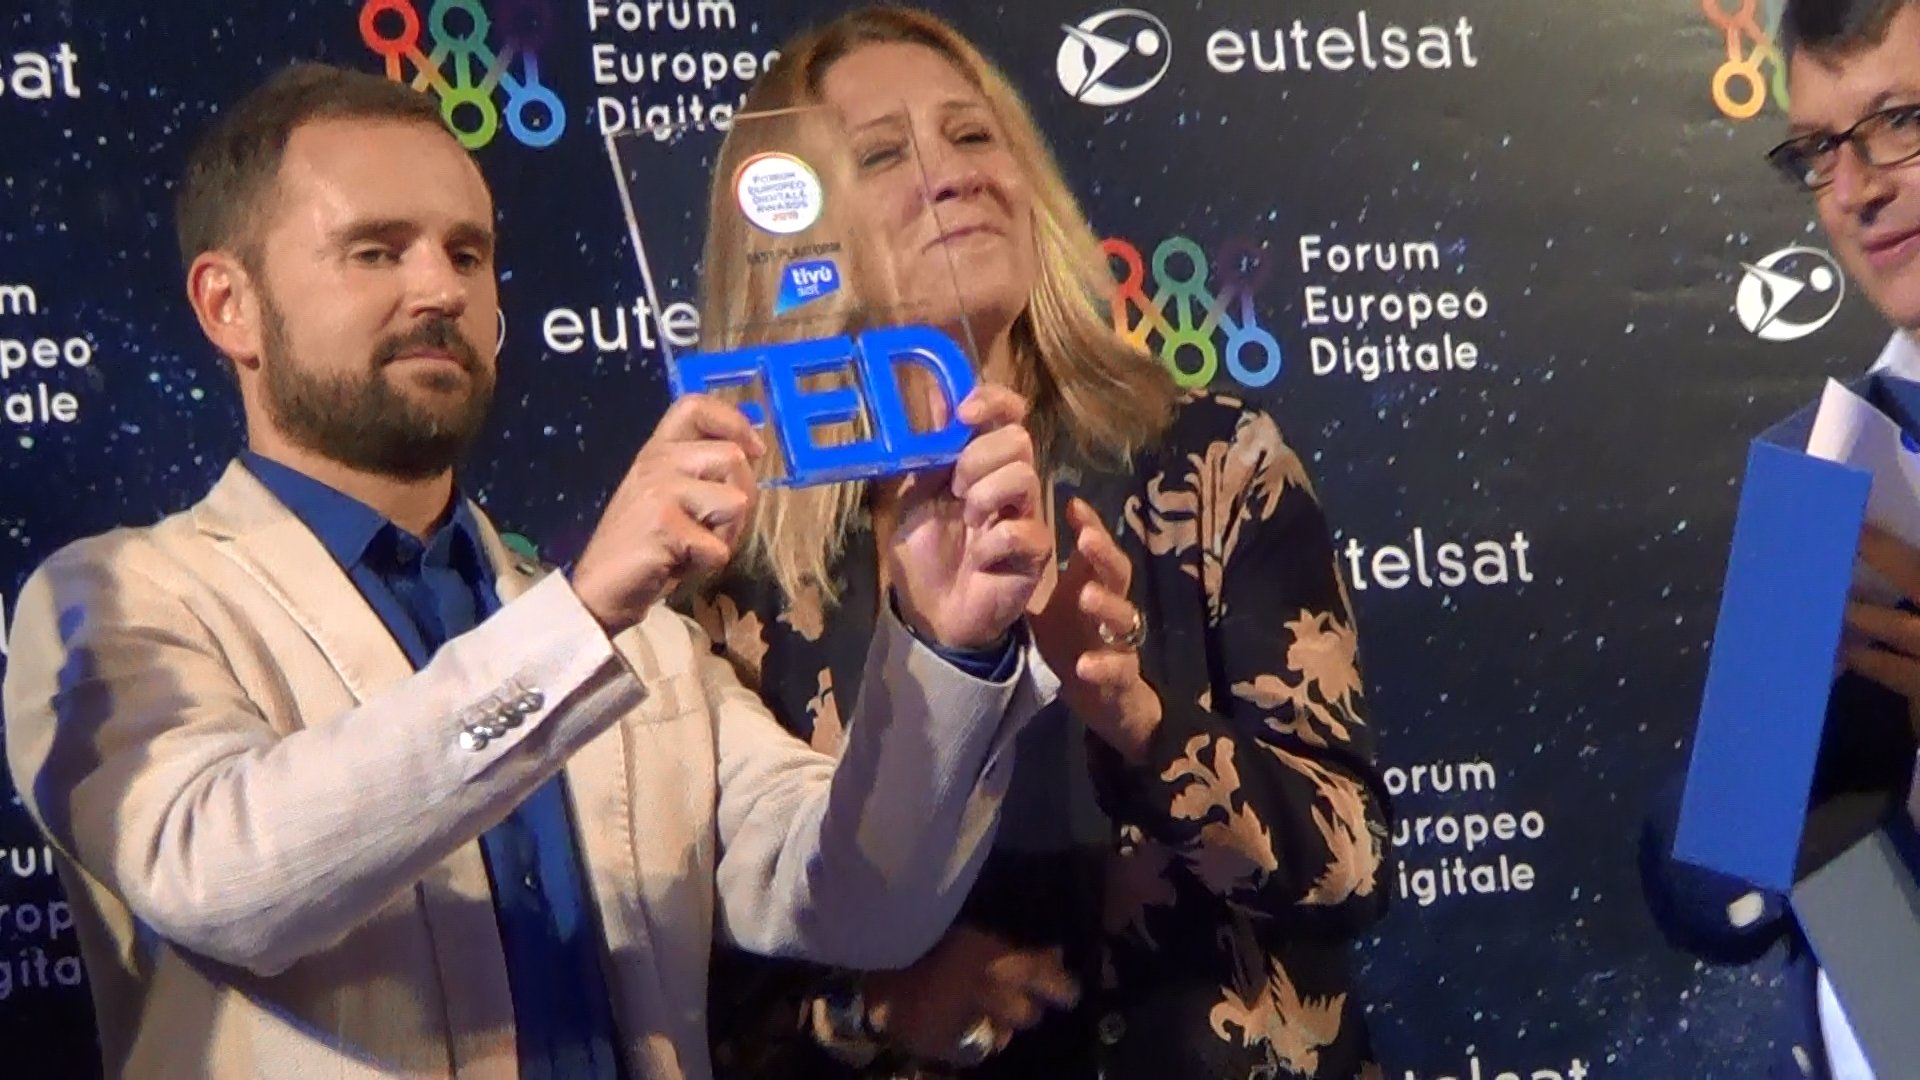 Forum Europeo Digitale Awards 2018, ecco tutti i vincitori premiati a Lucca